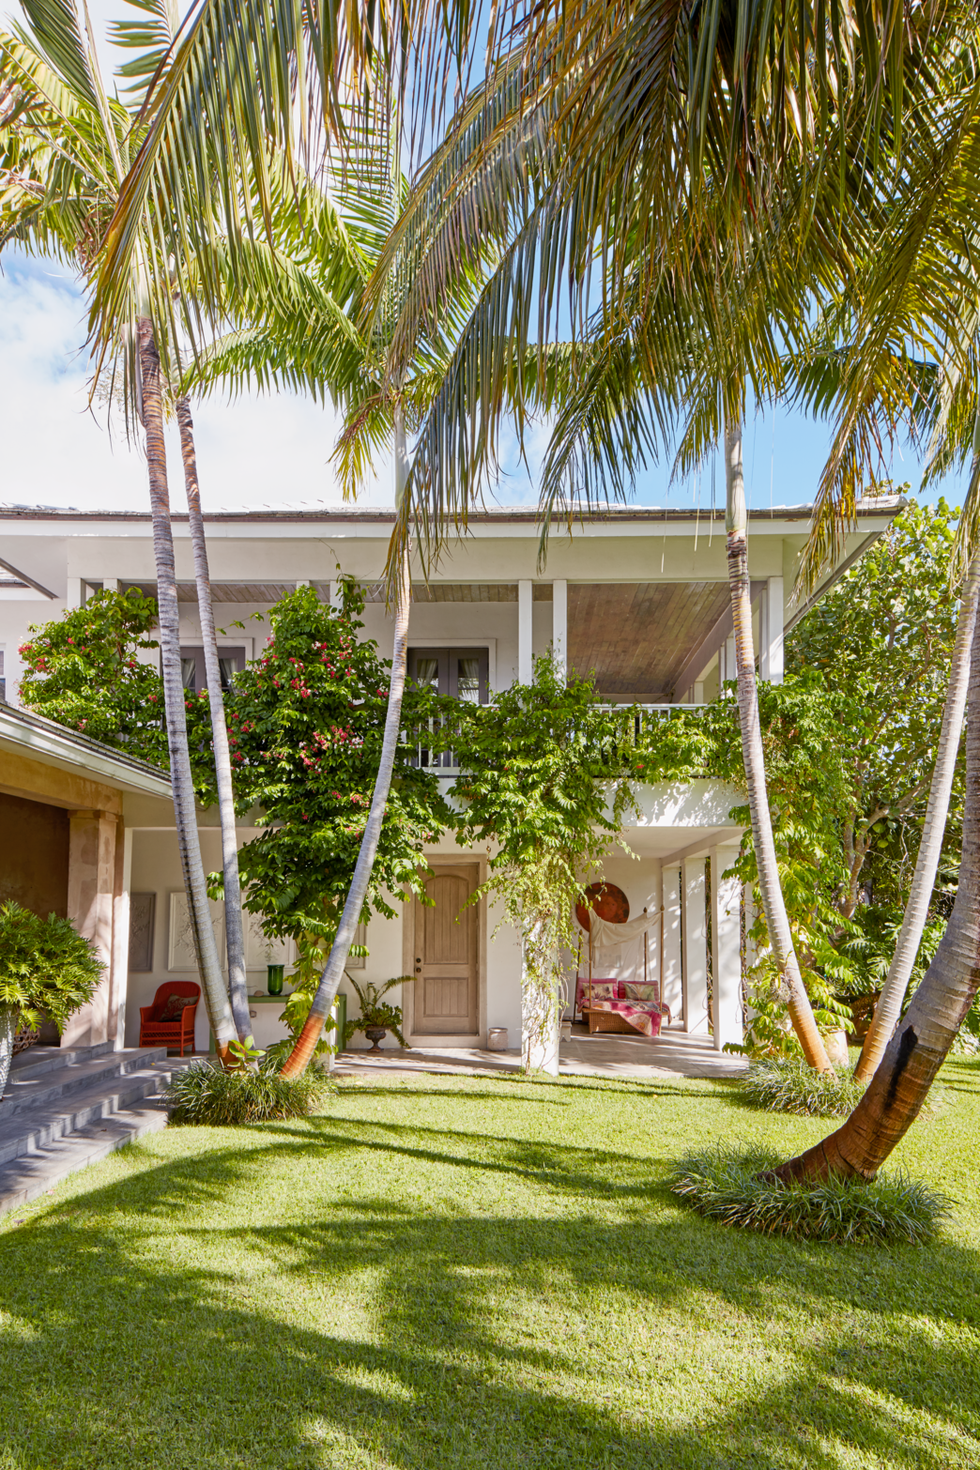 2020 kips bay palm beach show house bolander master bedroom terrace veranda